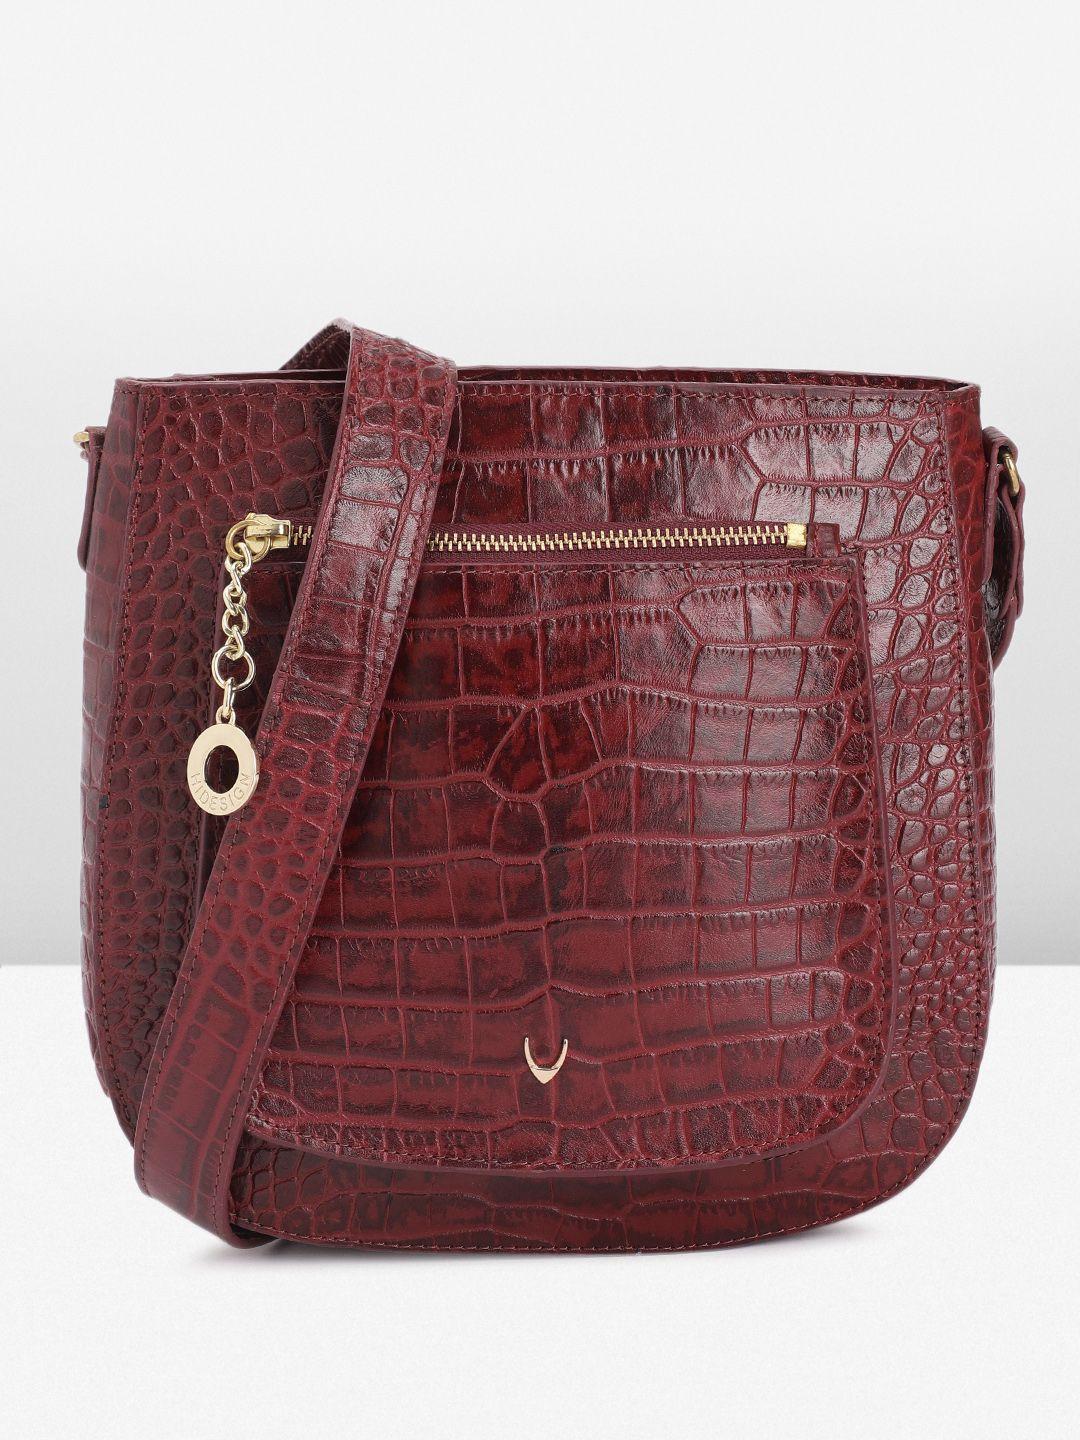 hidesign women textured leather sling bag